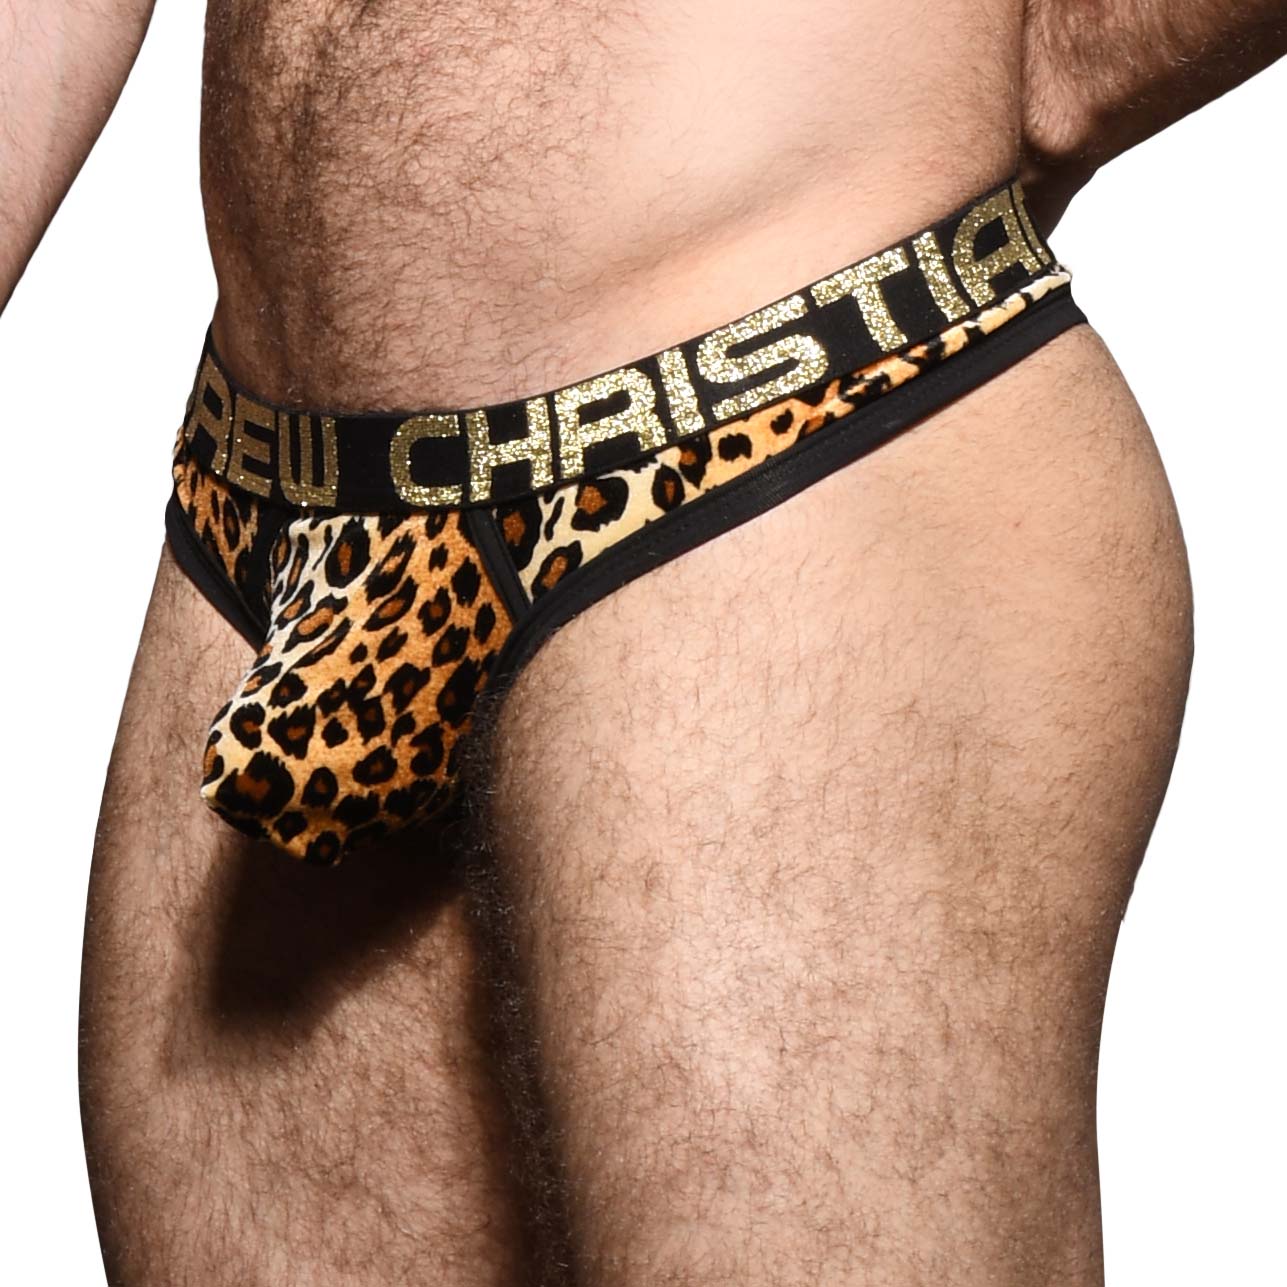 String Andrew Christian Plush Leopard Almost Naked 92296